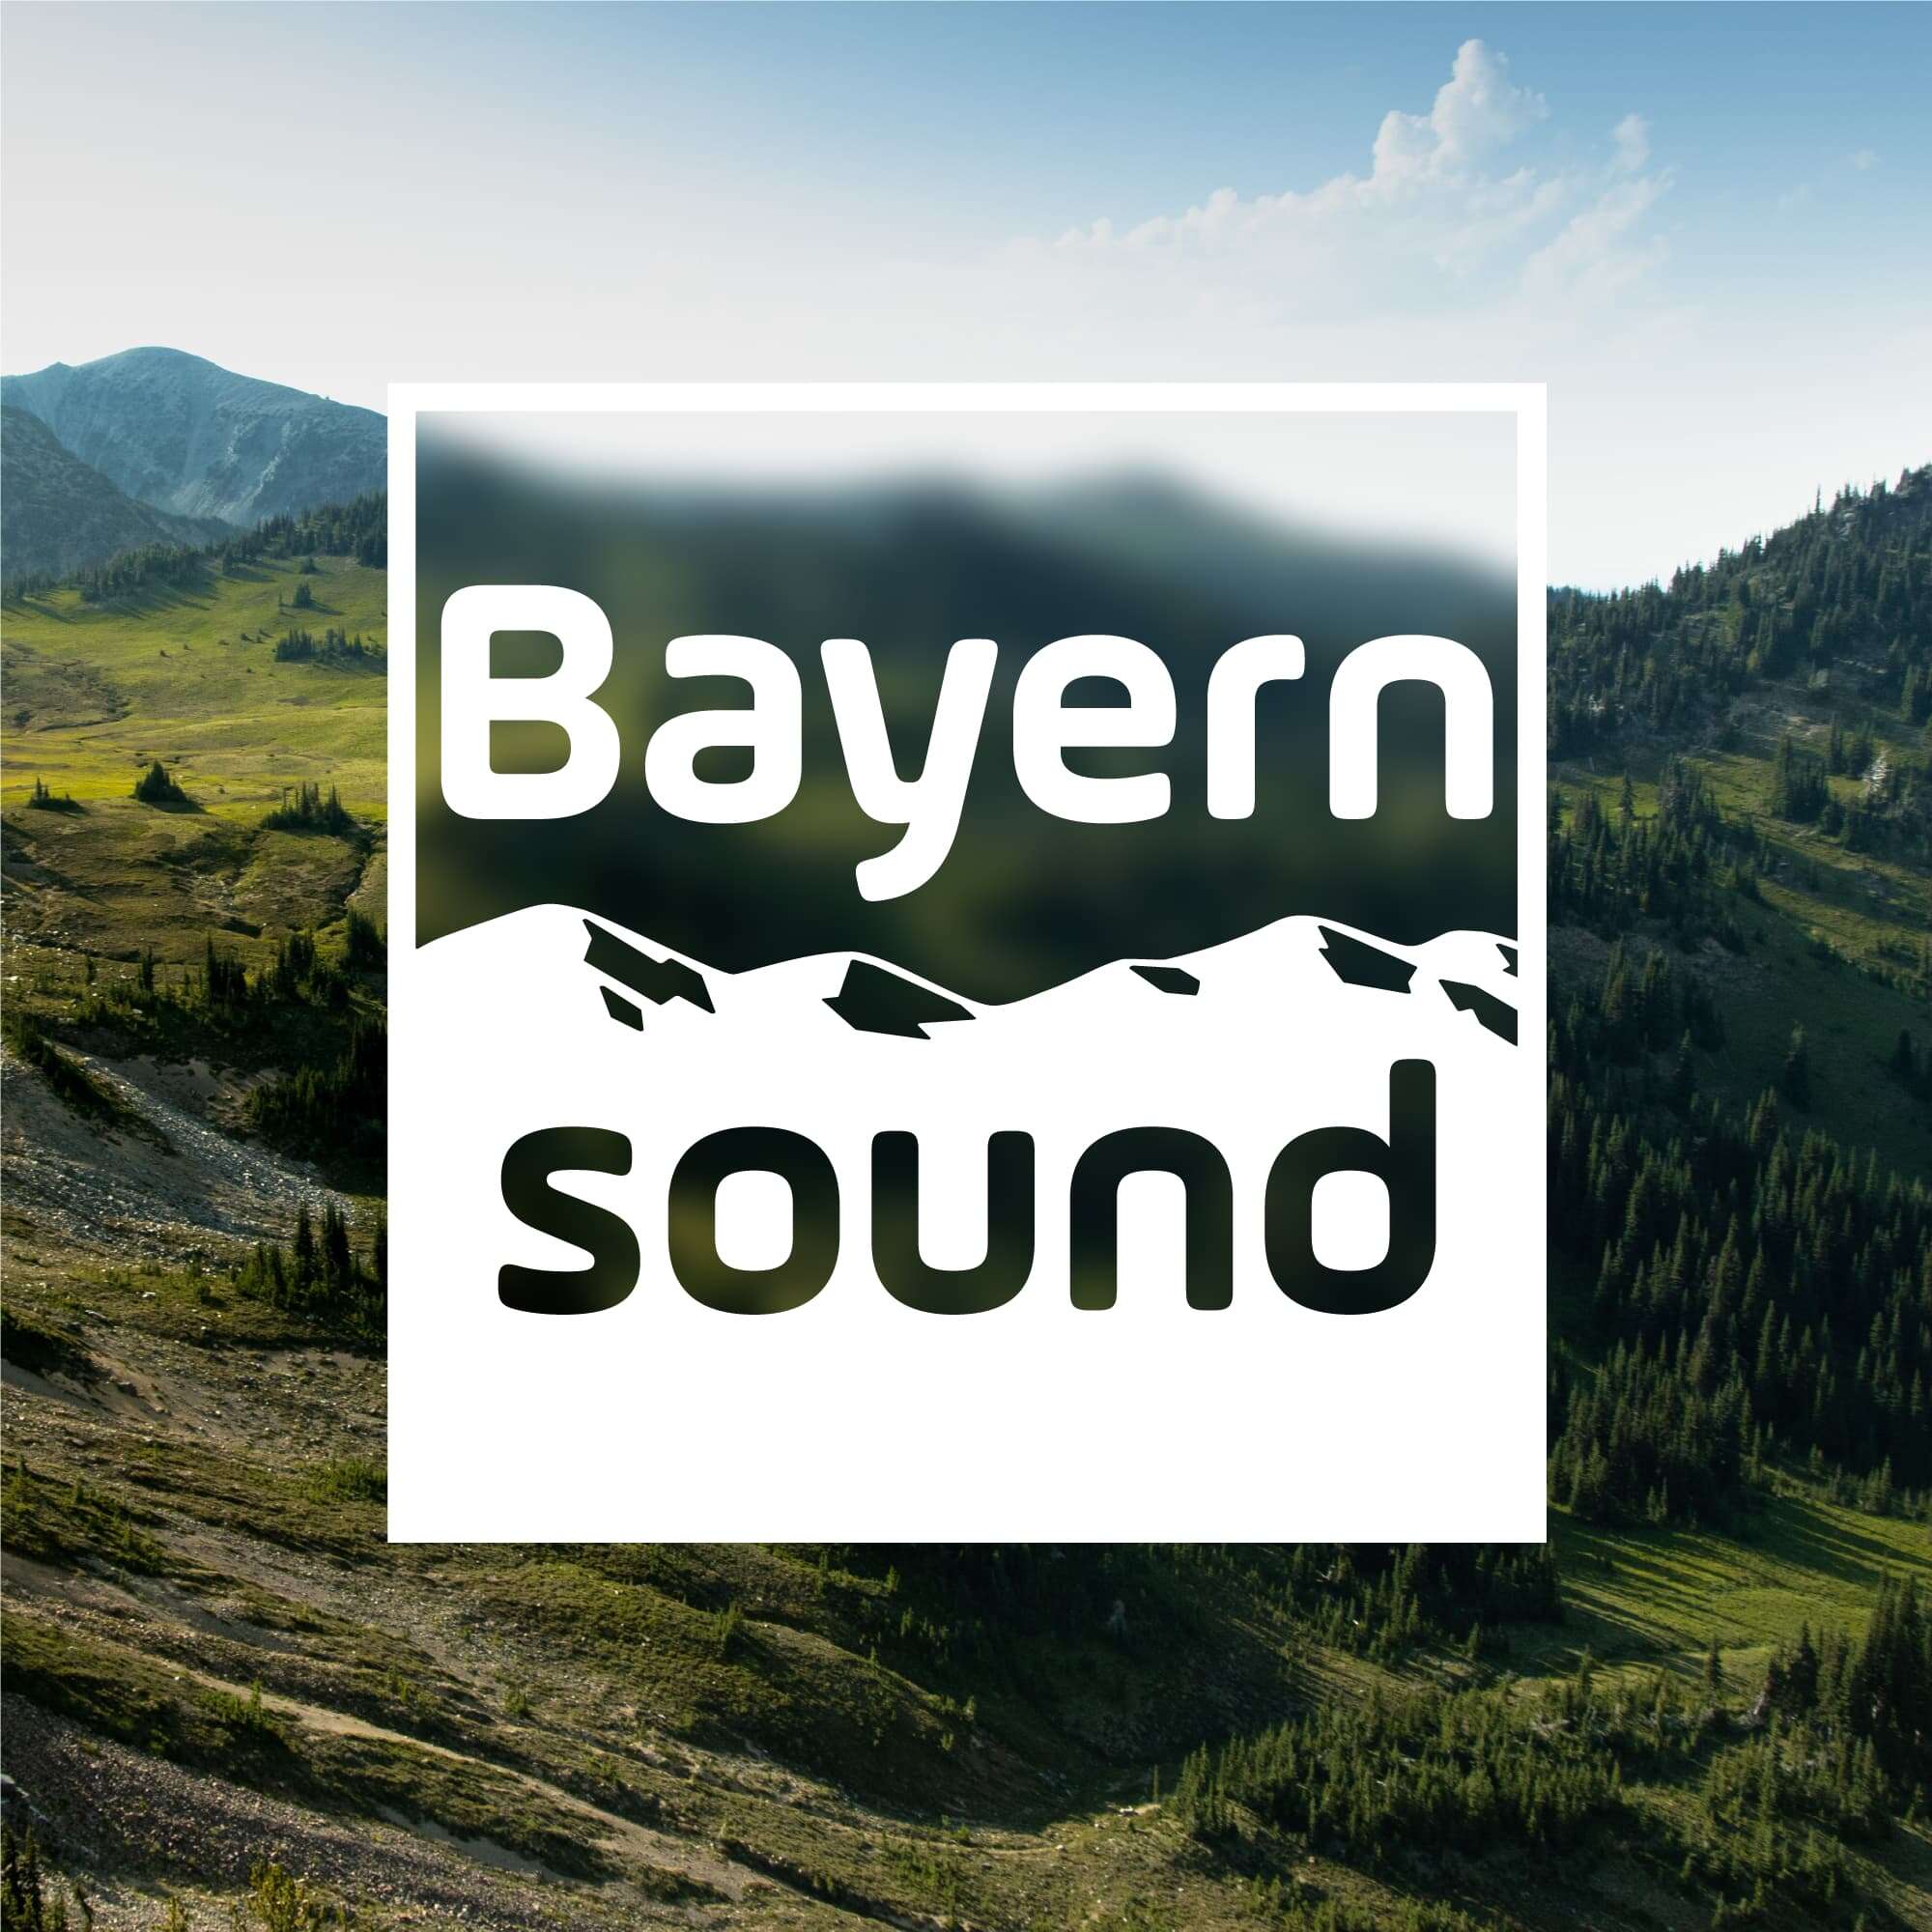 Bayern Sound